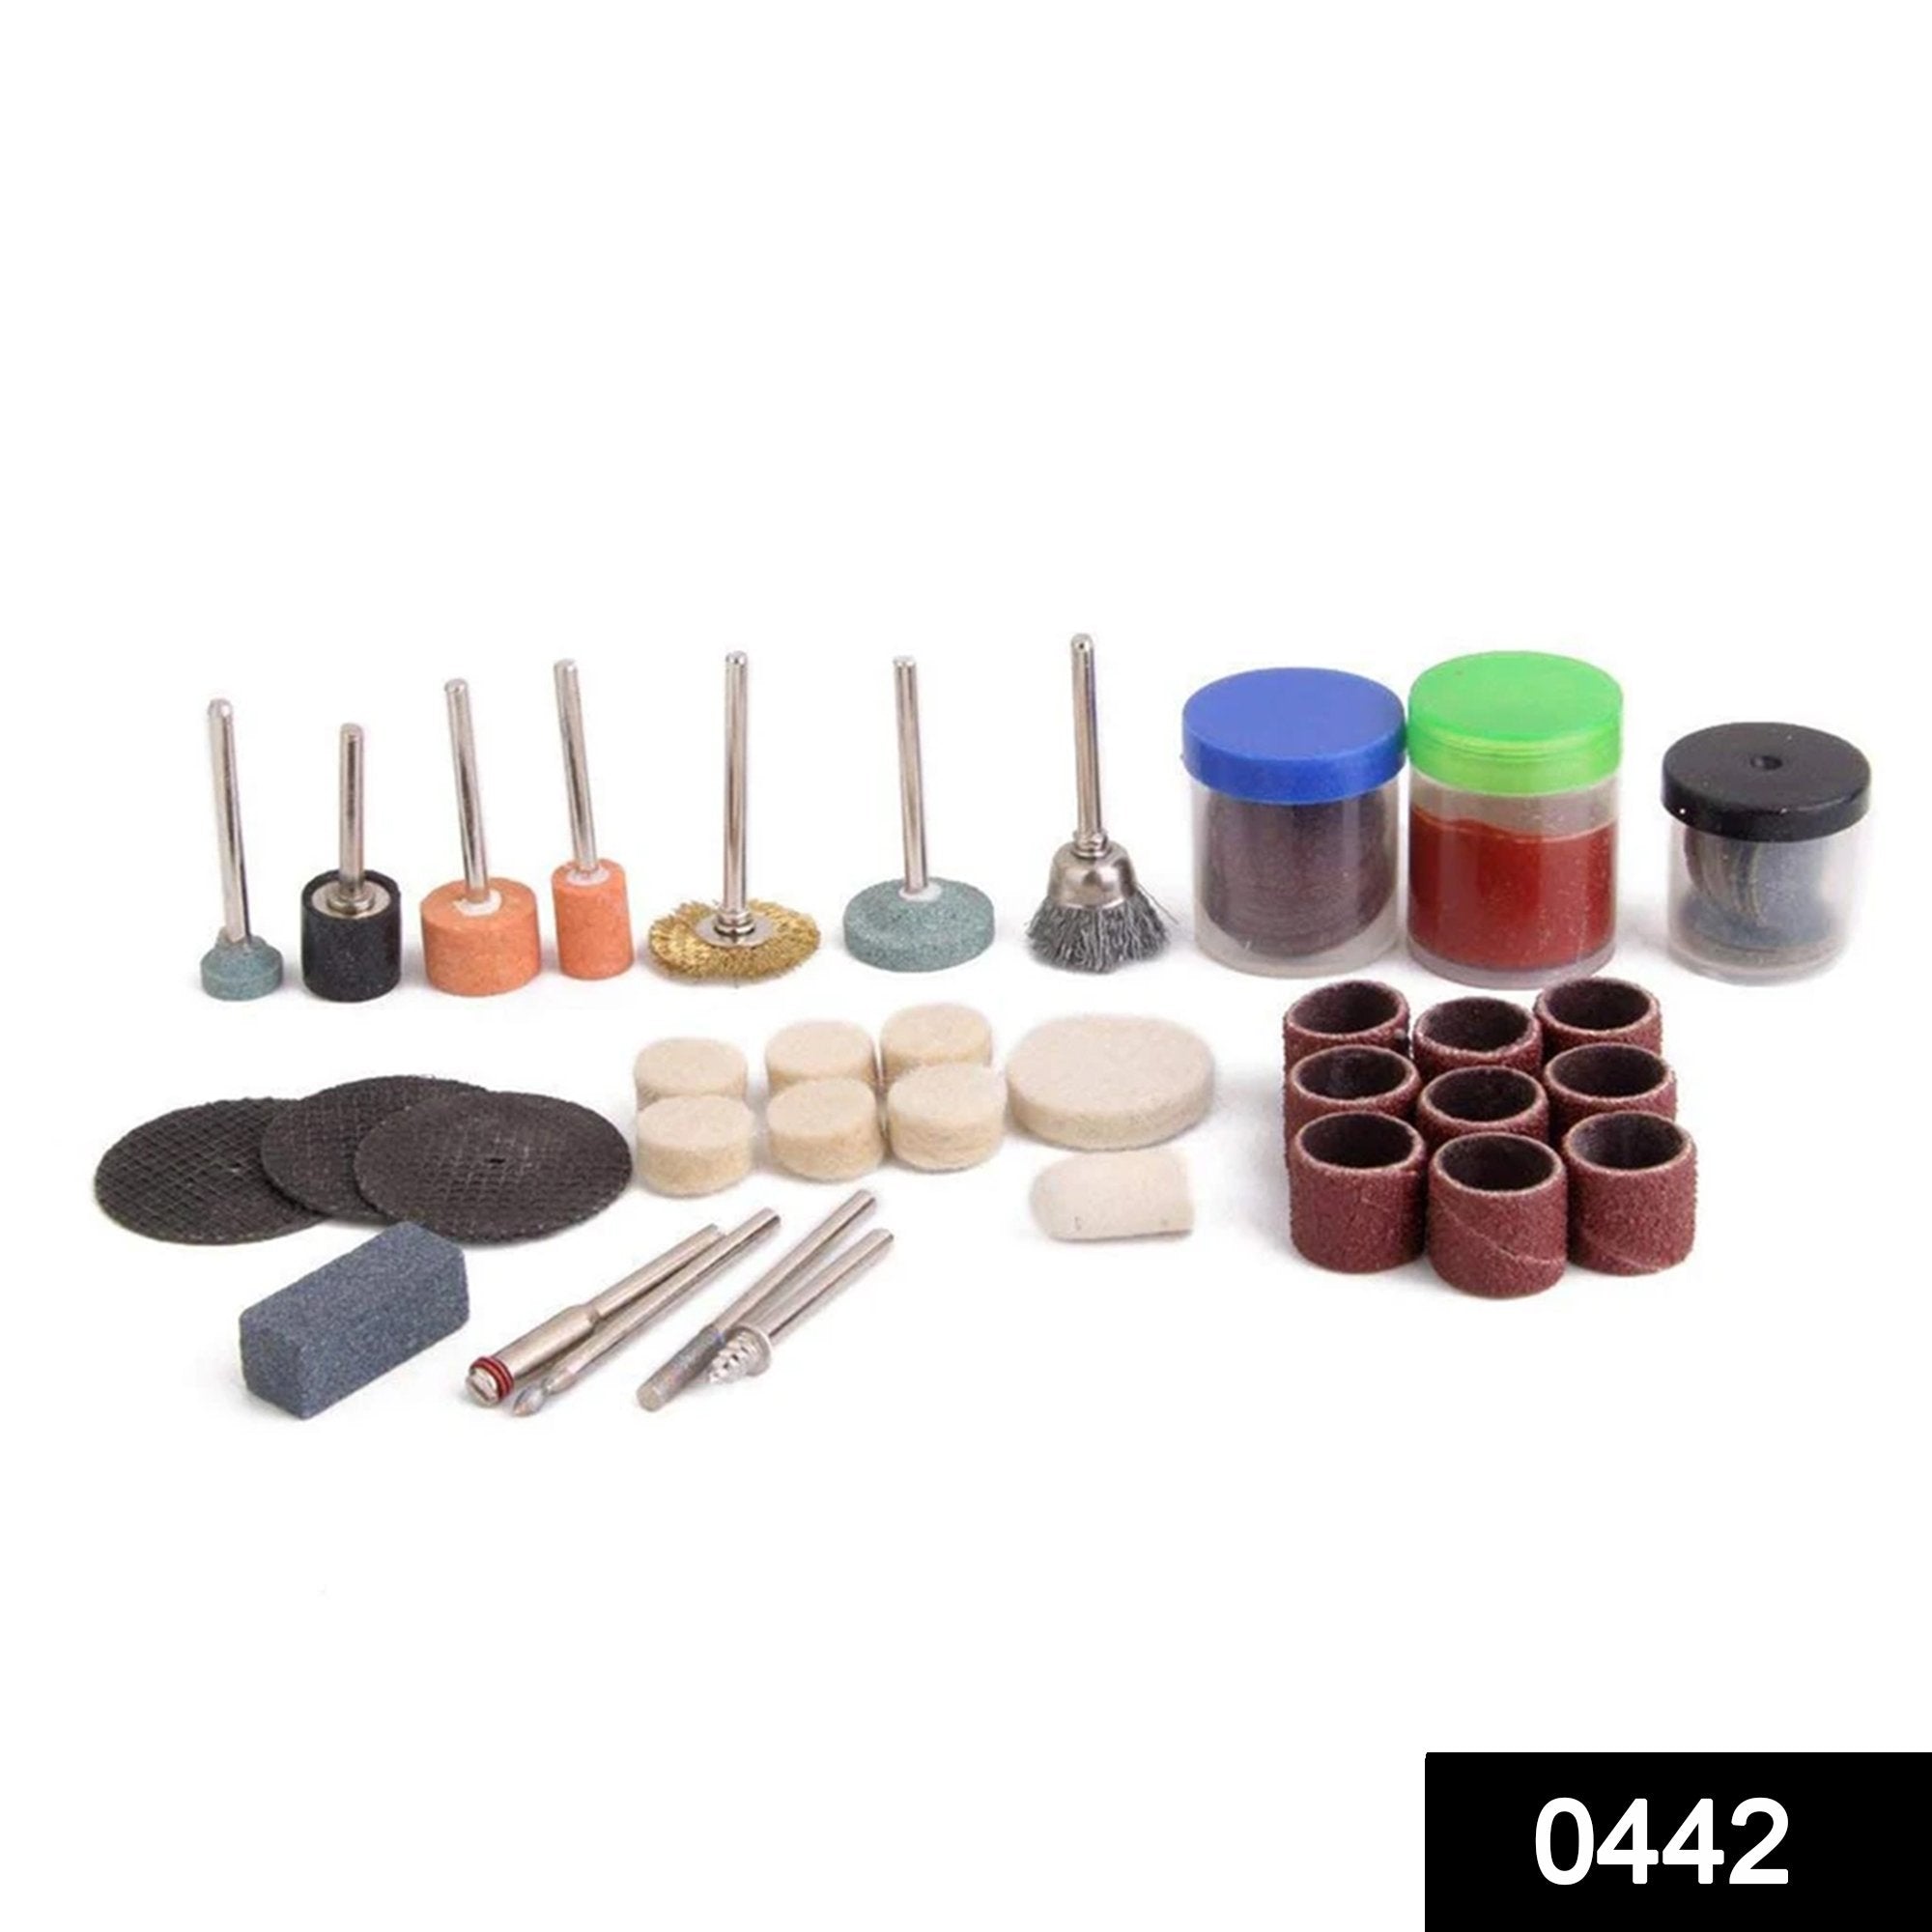 0442 Cutting Grinding Polishing Engraving Drill Bits Rotary Set (105 pcs) - SkyShopy